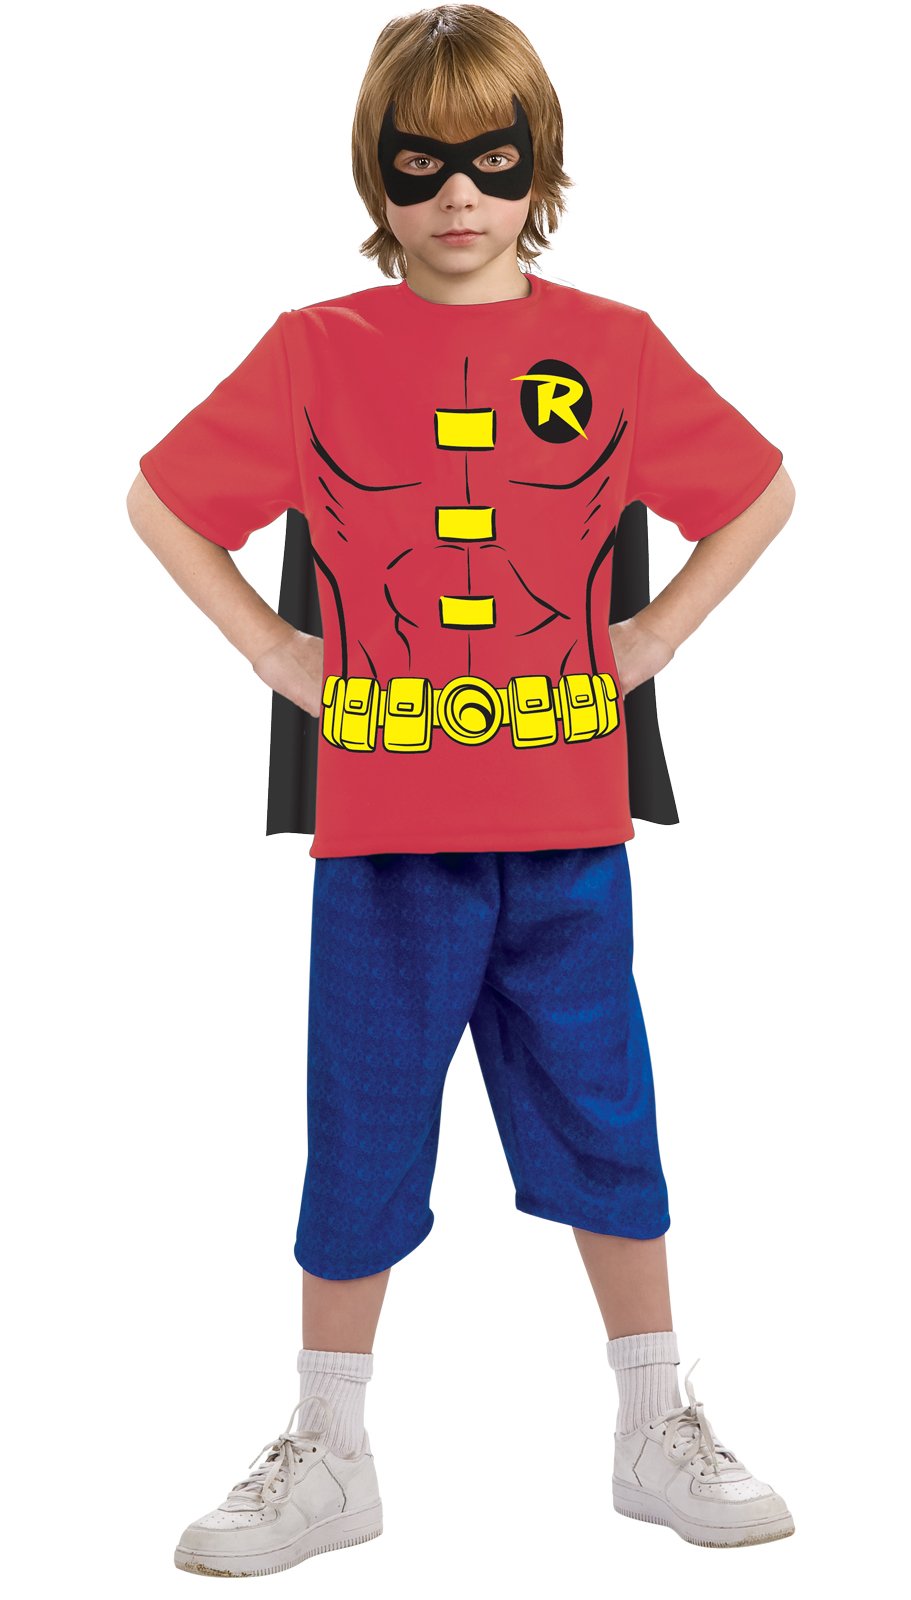 Robin Child Costume Kit